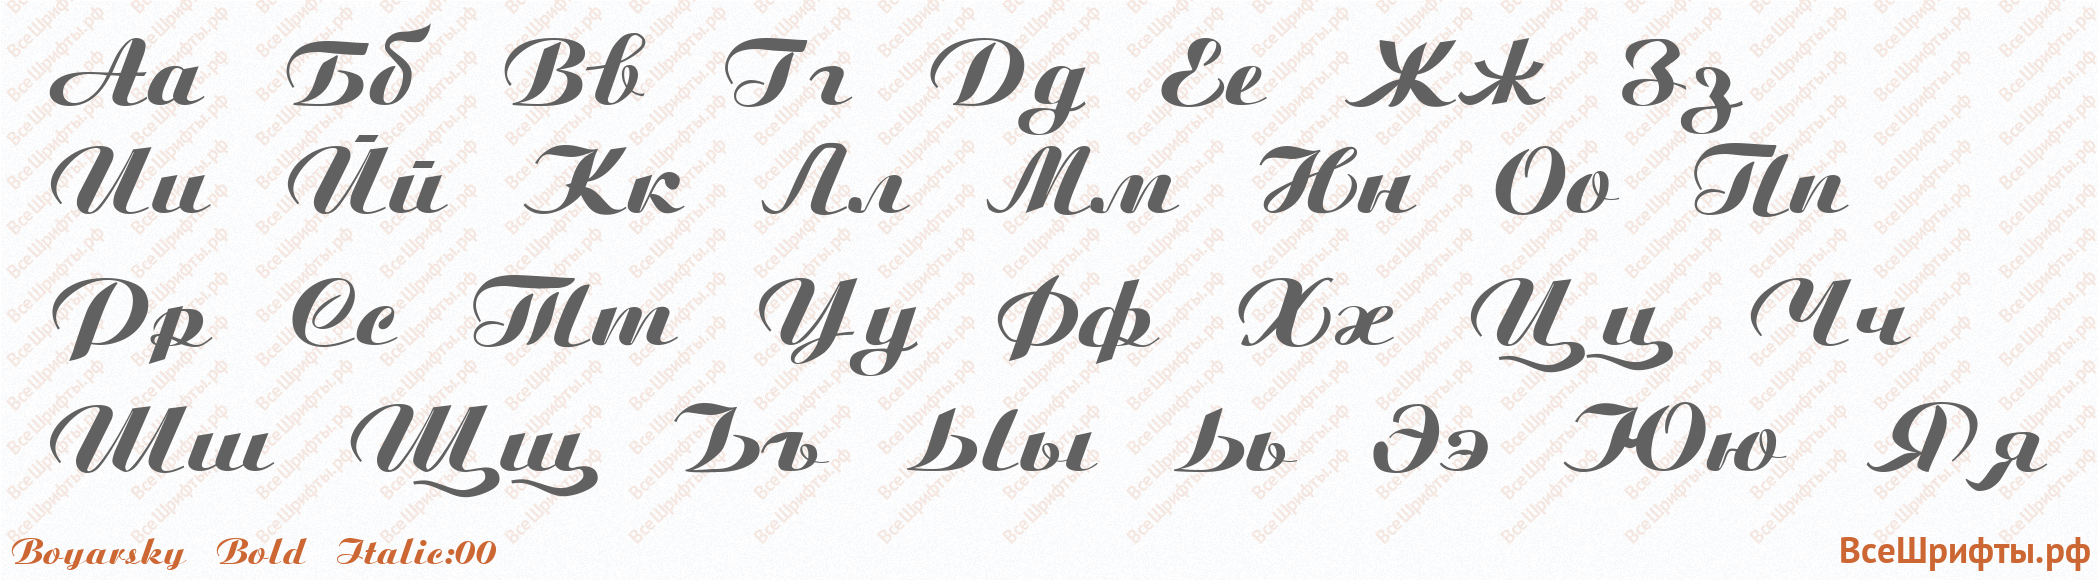 Шрифт Boyarsky Bold Italic:00 с русскими буквами